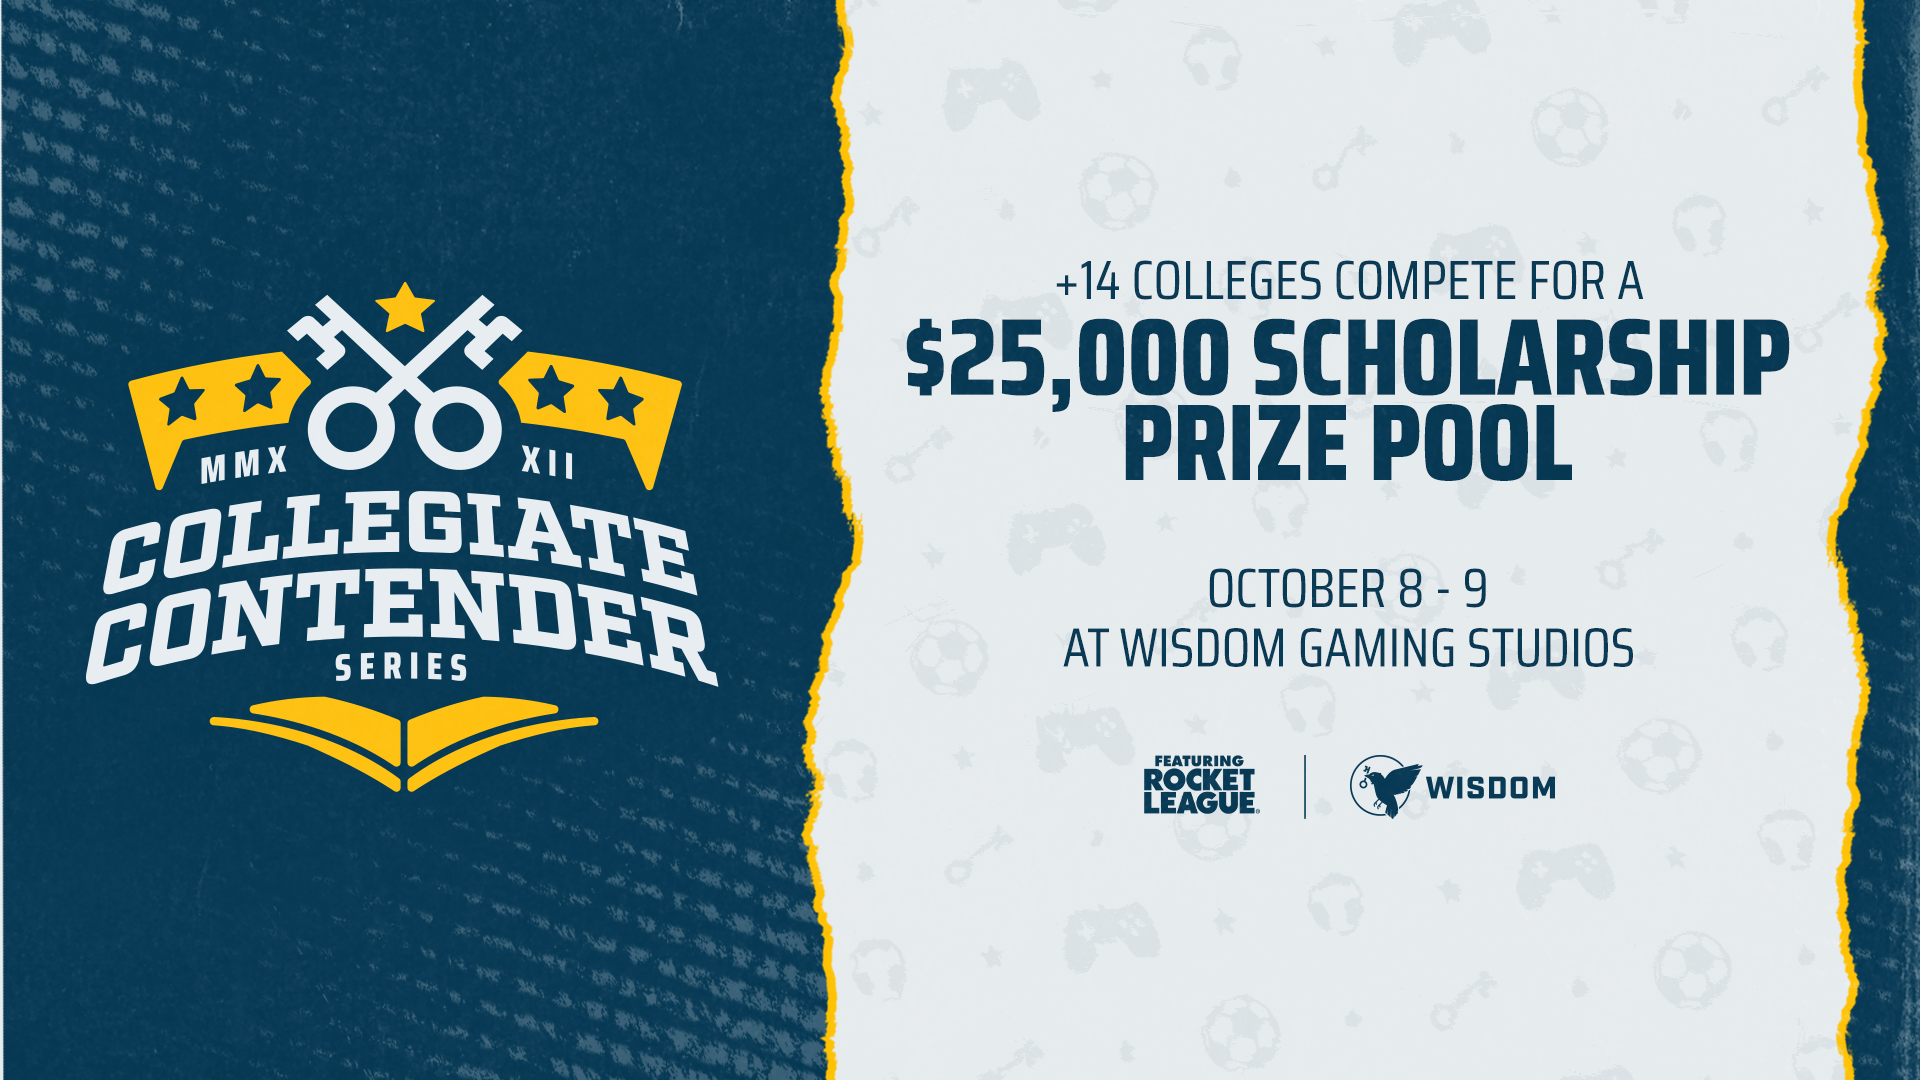 Wisdom Gaming launches $25,000 Collegiate Rocket League tournament